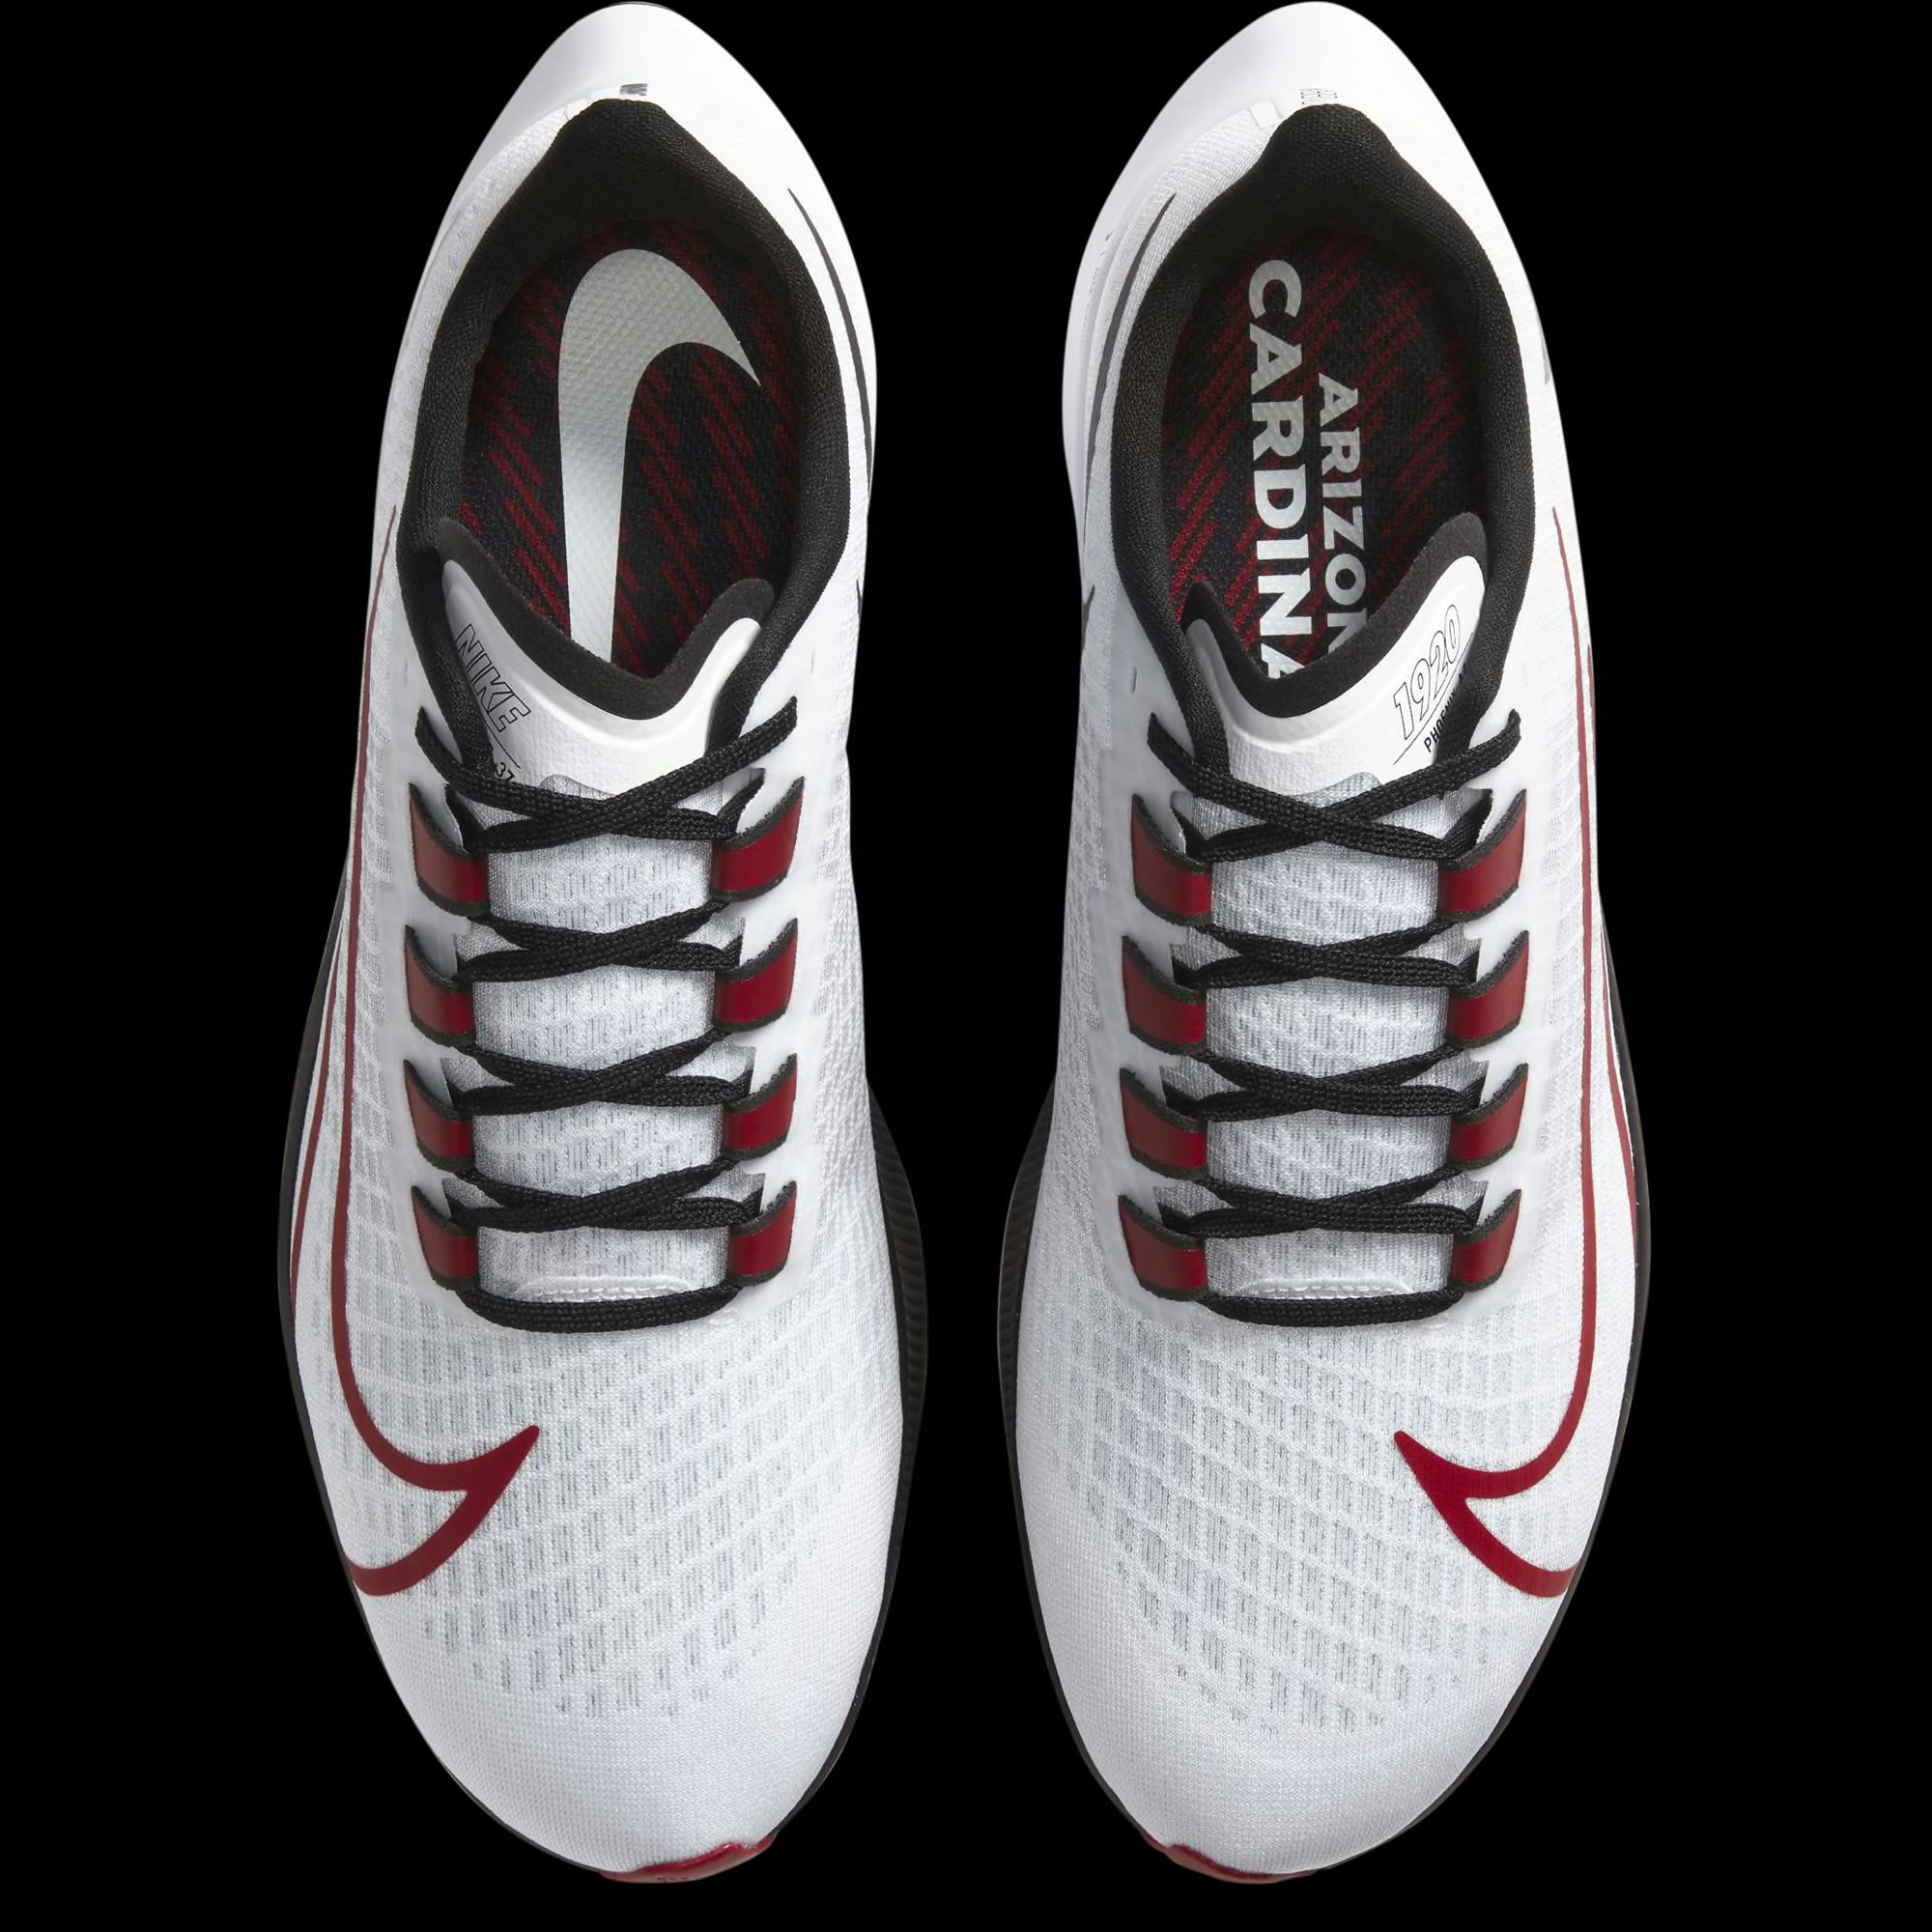 These new Arizona Cardinals Nike shoes 